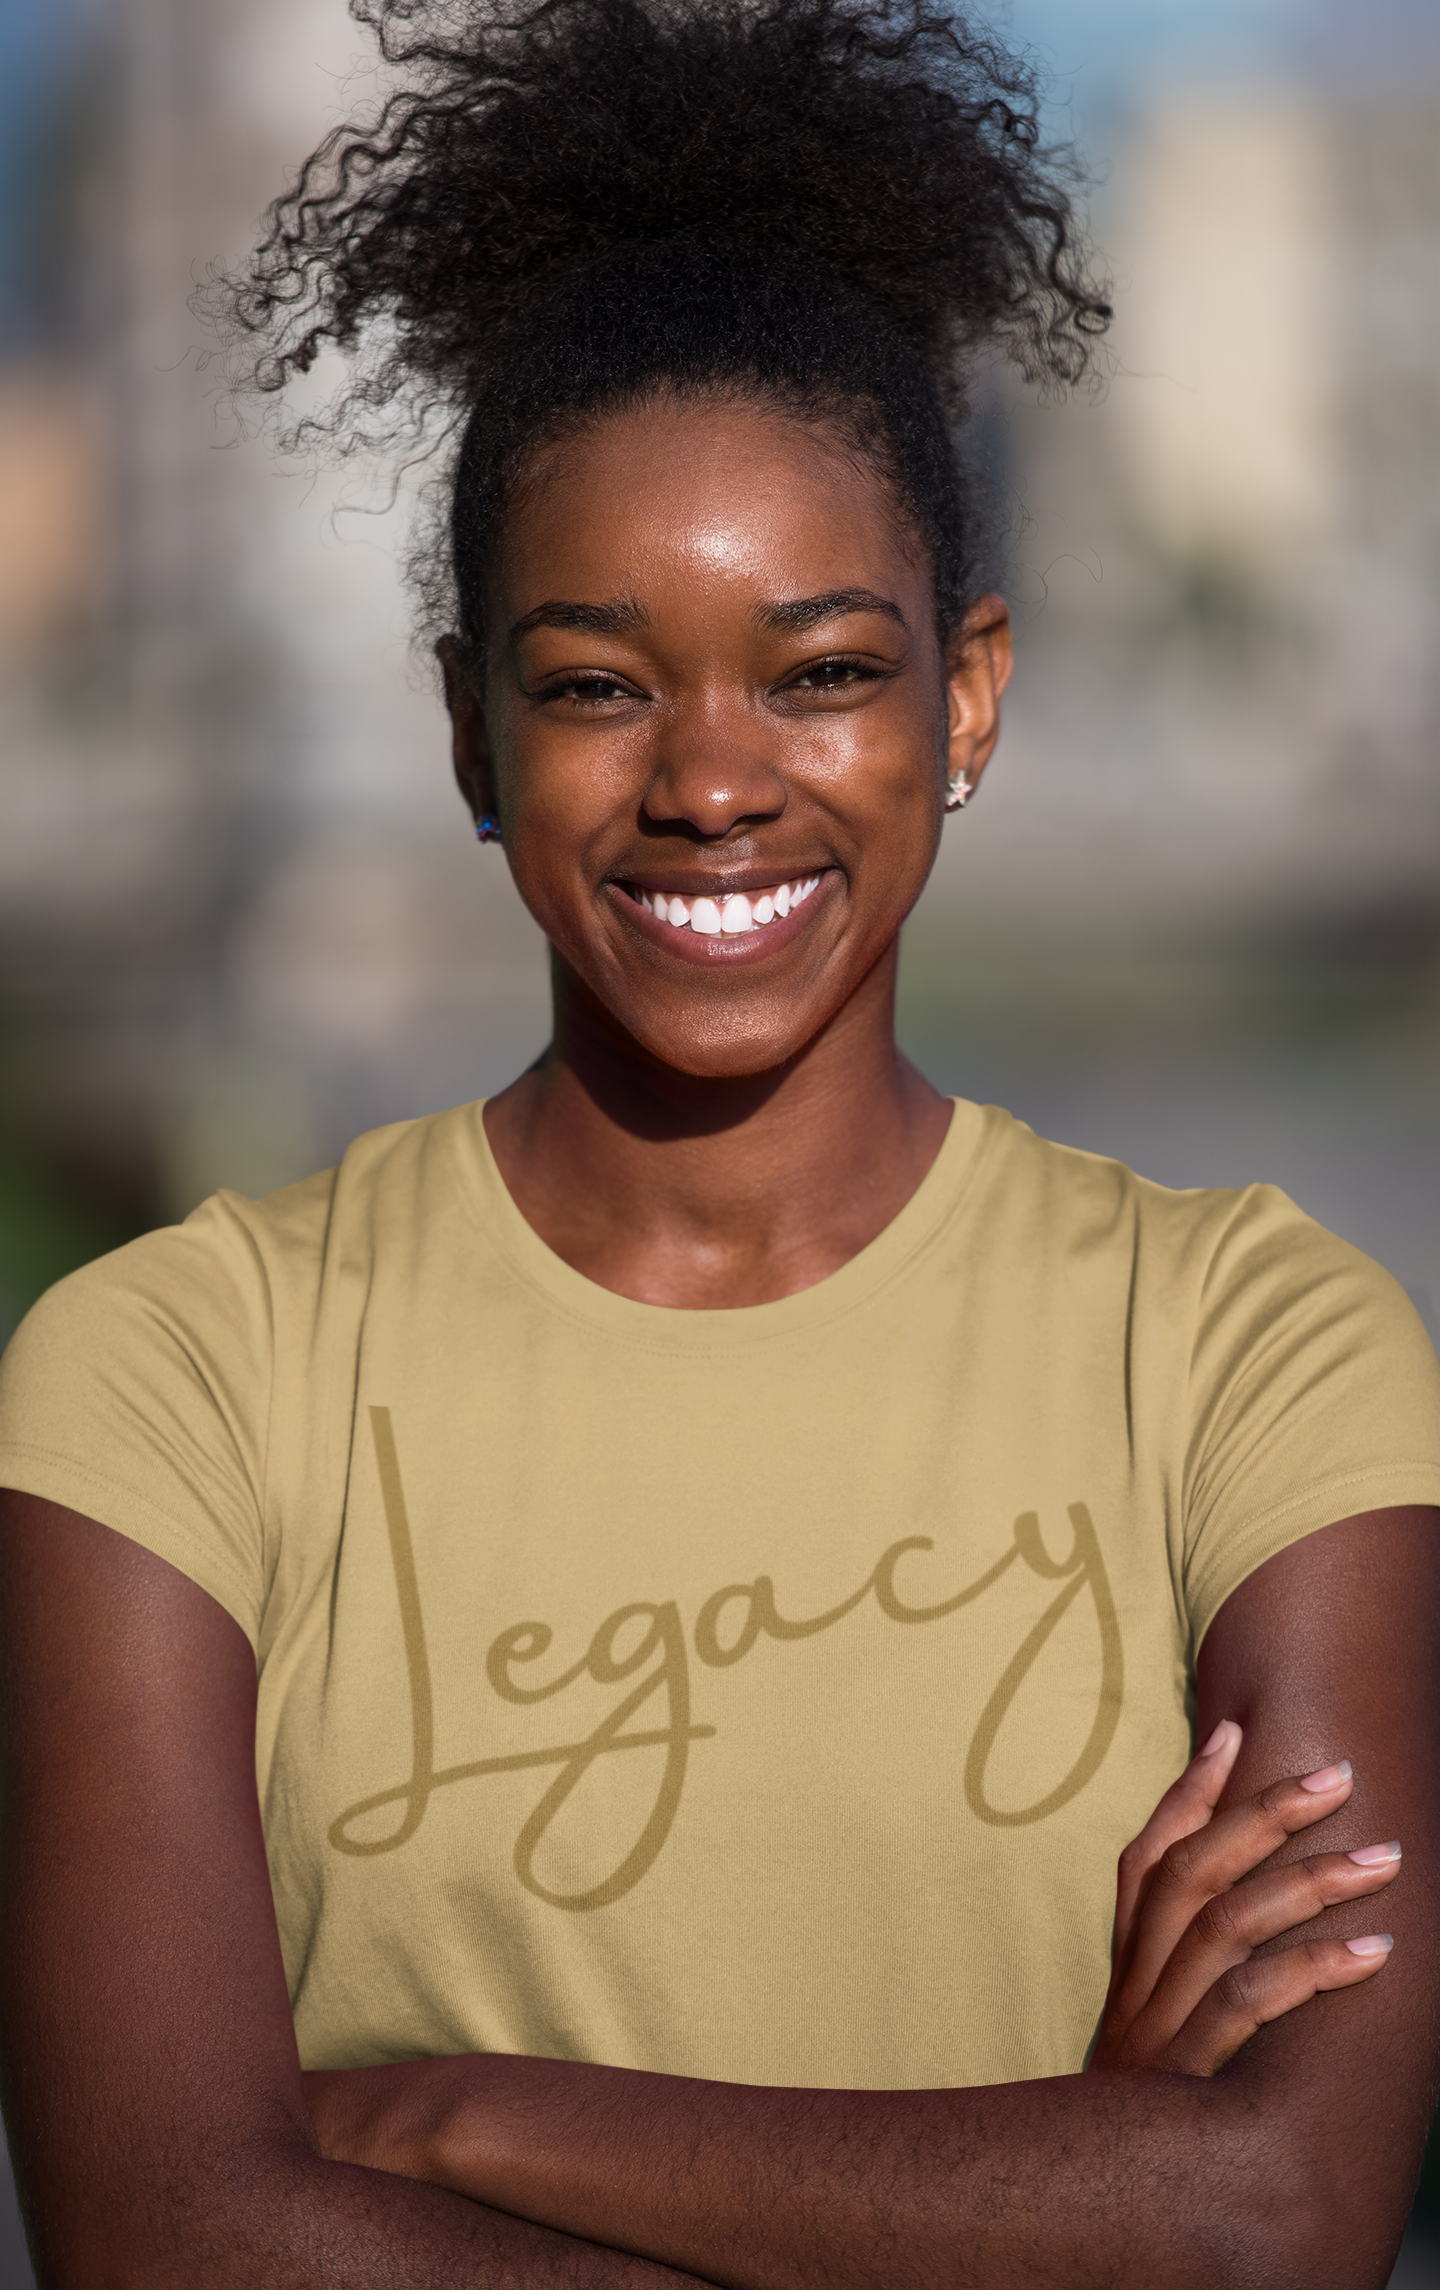 "Beyond Legacy, Script" - Unisex Crew & Ladies V-Neck T-Shirt